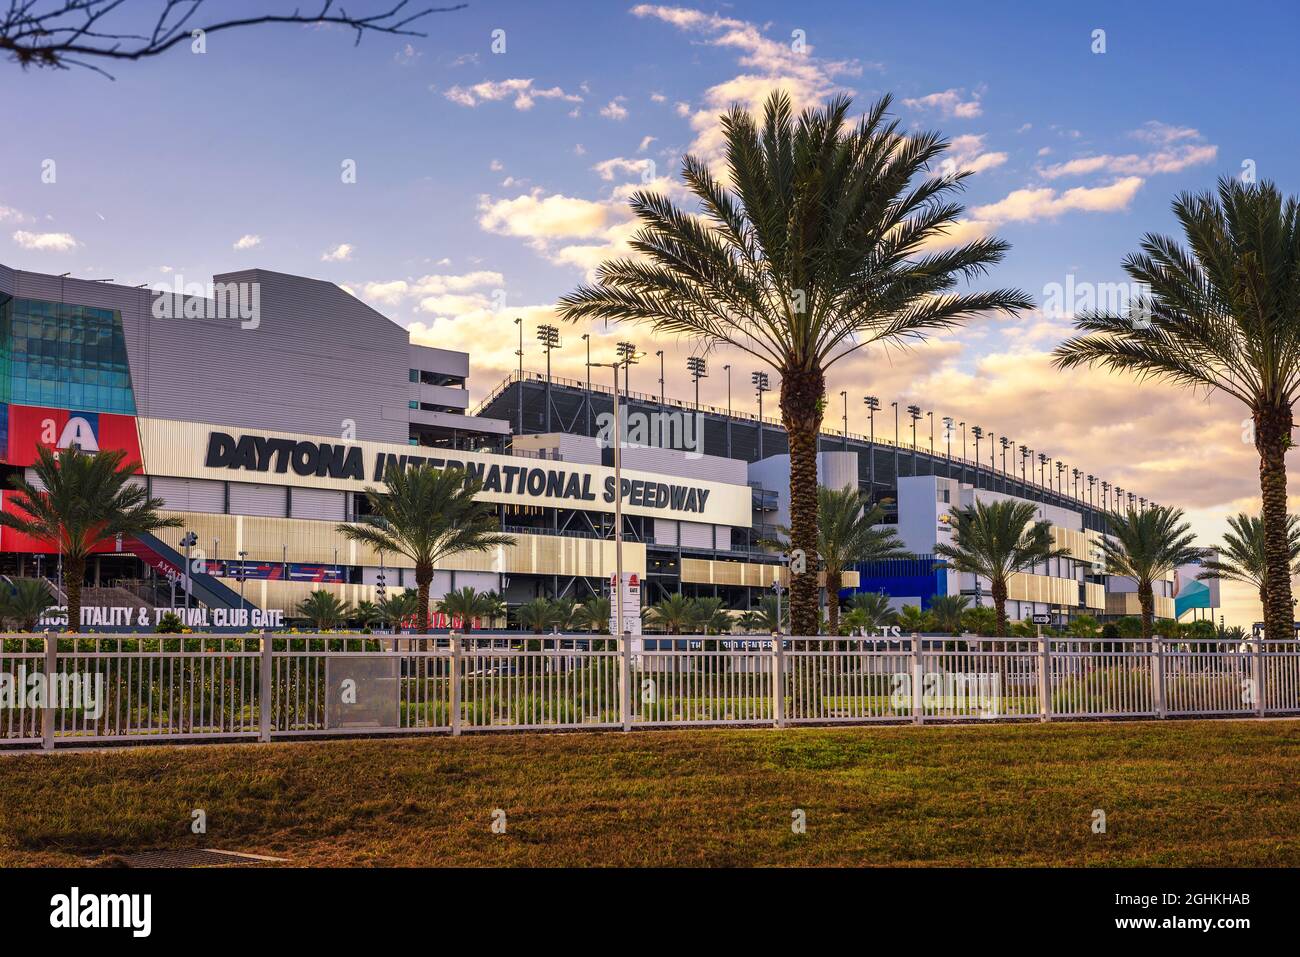 Daytona International Speedway in Daytona Beach, Florida. Stock Photo